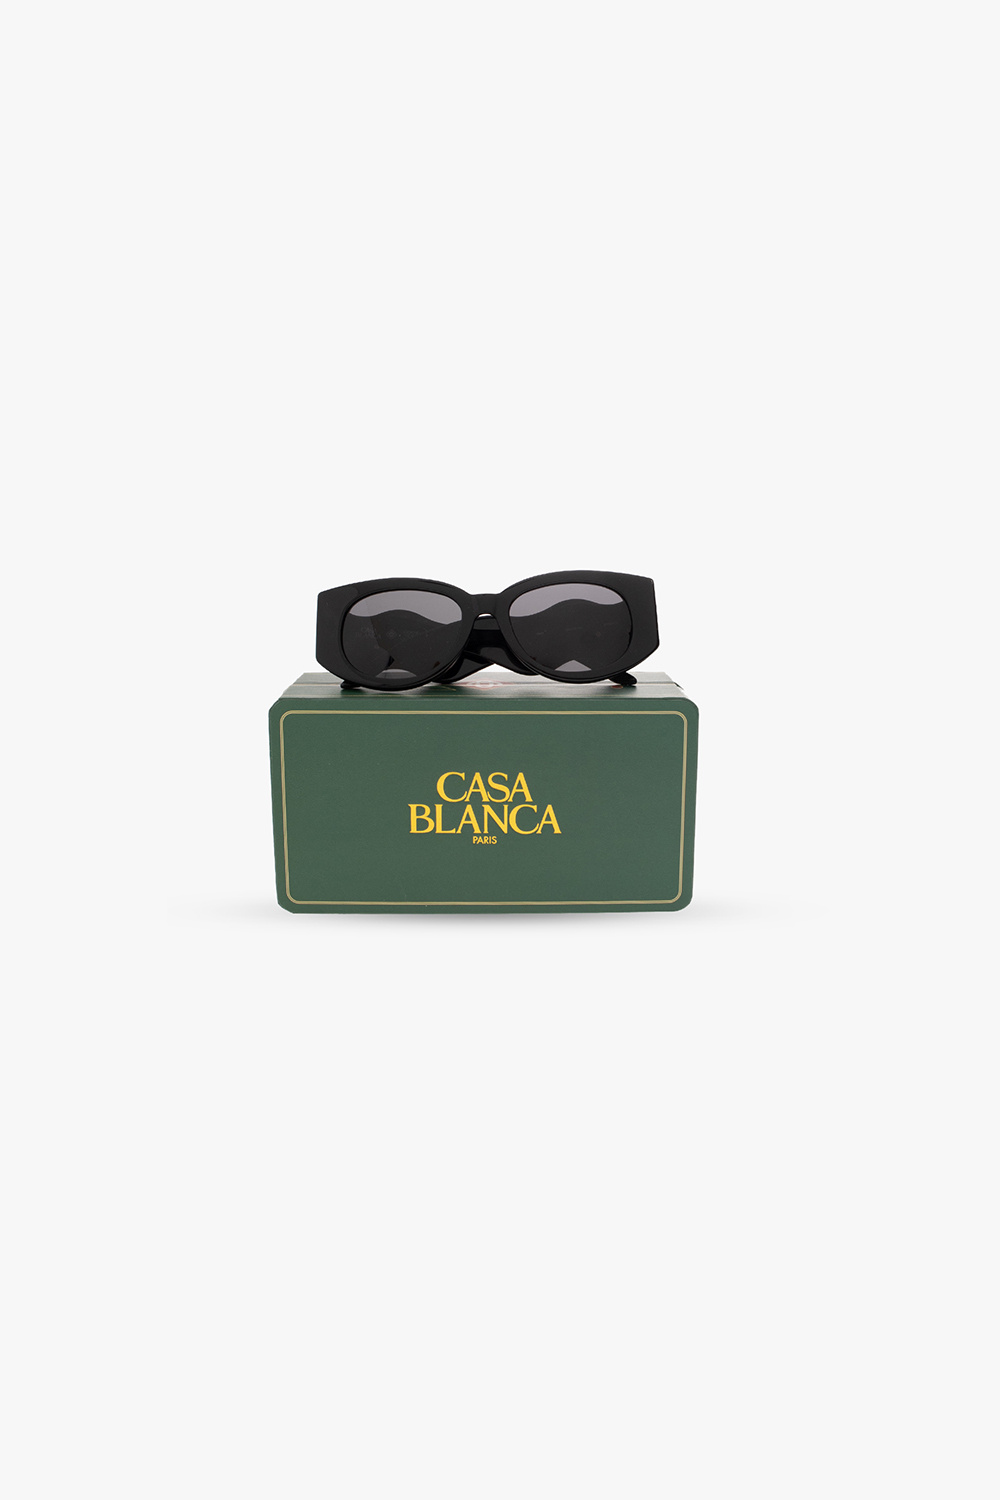 Casablanca Oval frame sunglasses